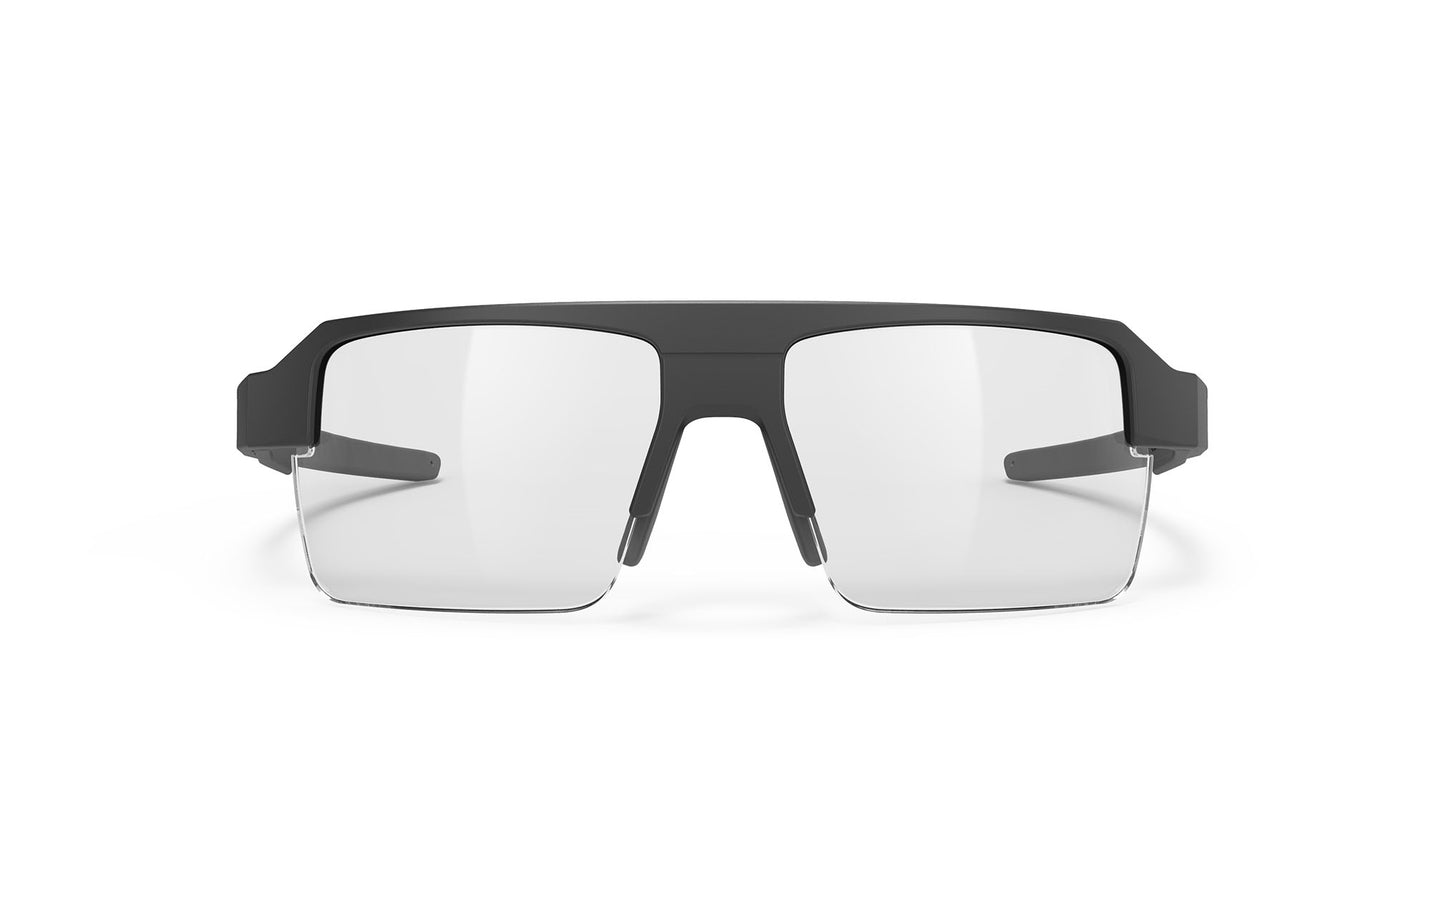 Rudy Project Sirius Black Matte - Impactx Photochromic 2 Black Sunglasses